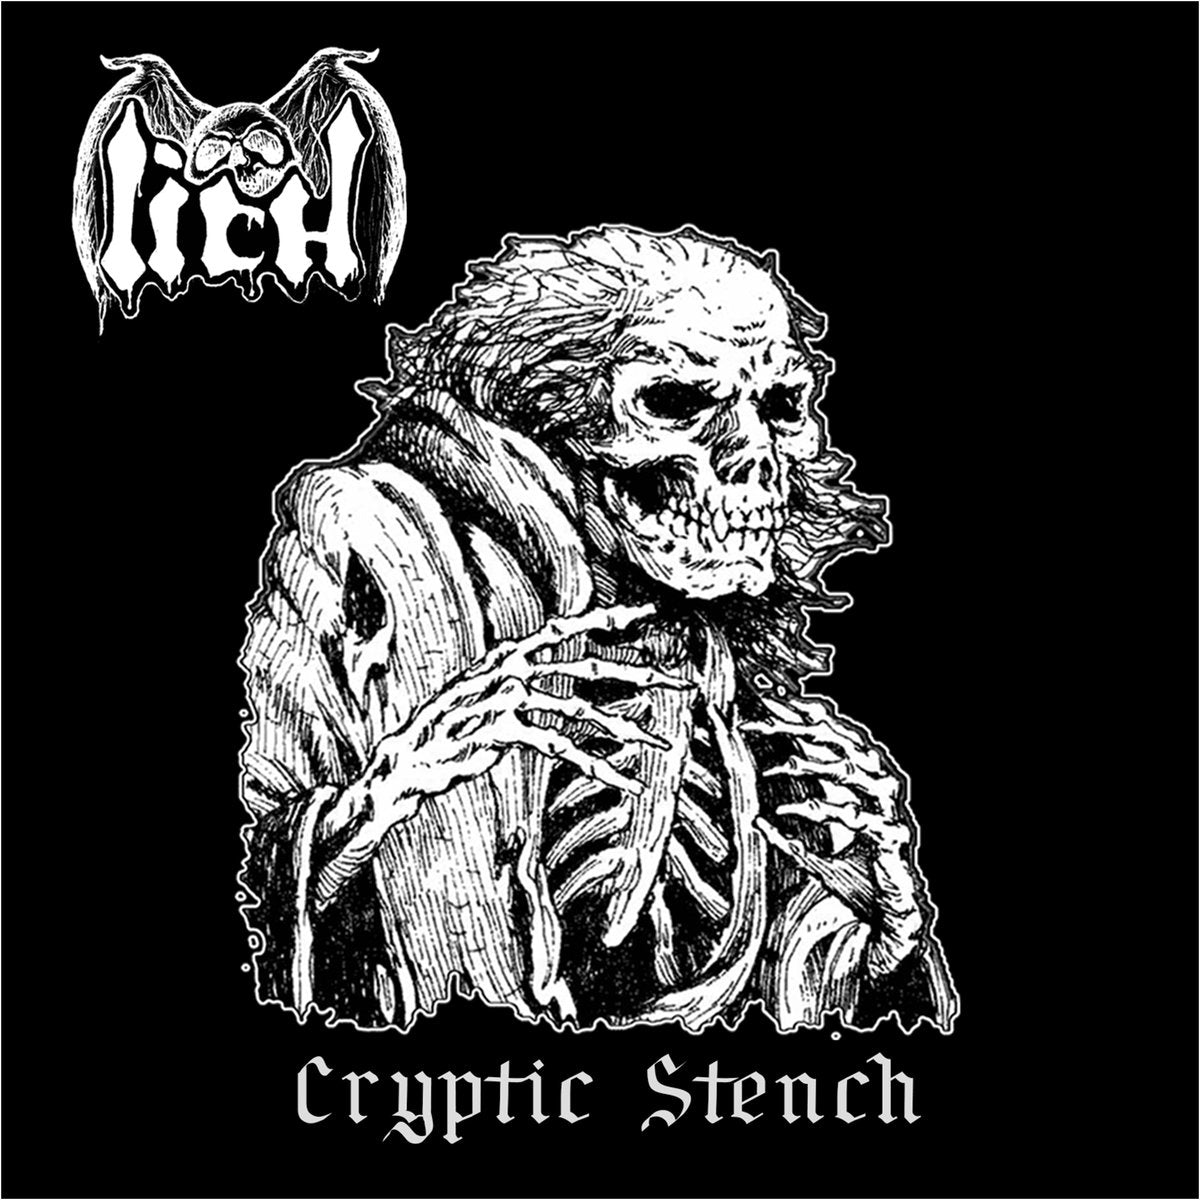 Lich - Cryptic Stench  (CD)